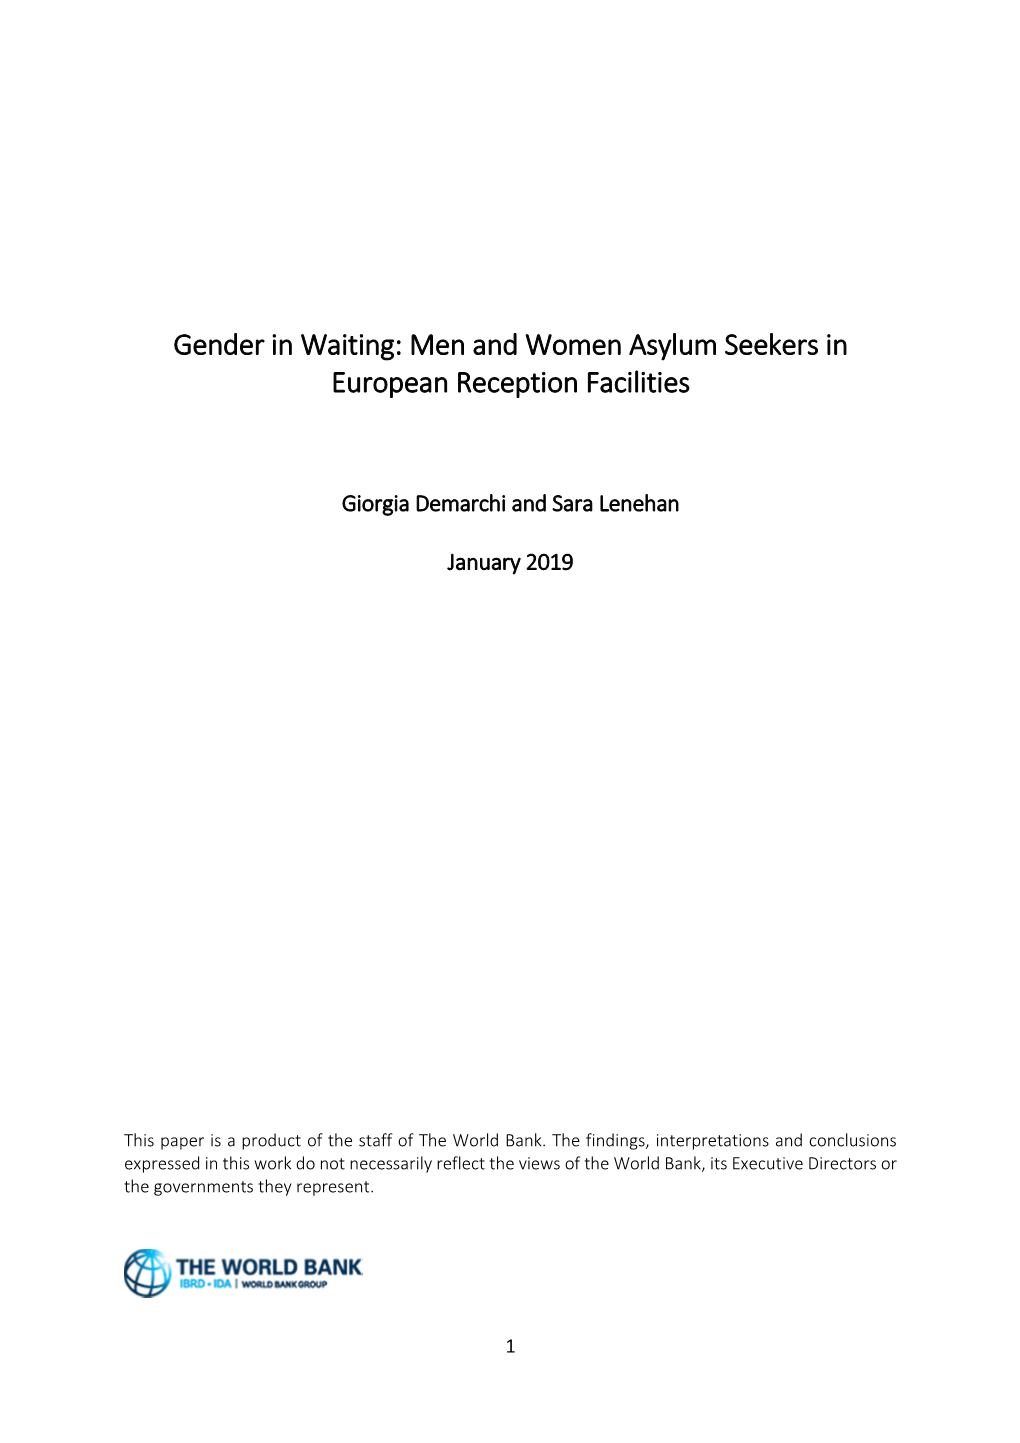 Men and Women Asylum Seekers in European Reception Facilities